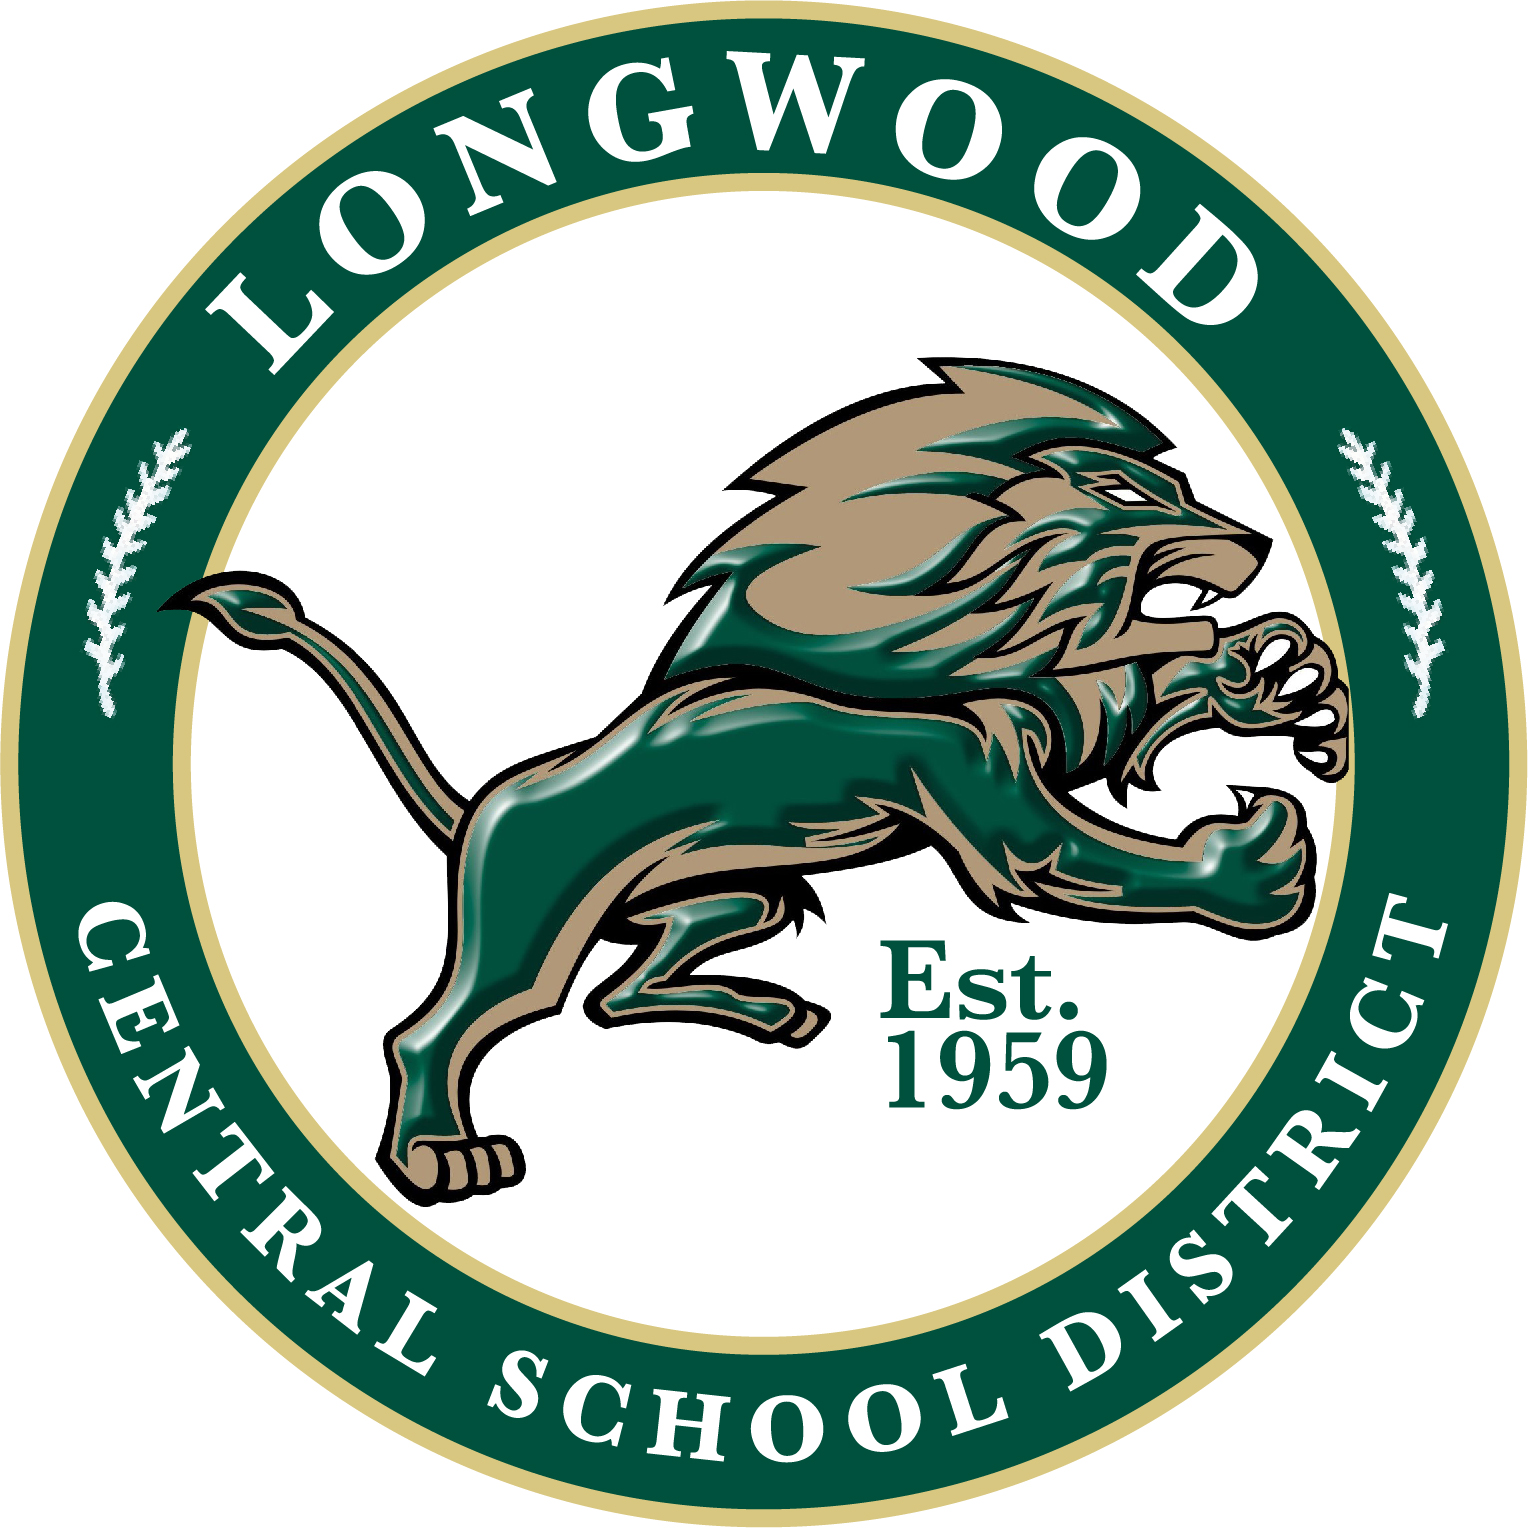 Longwood Central School District Calendar 2024 2025 Delia Fanchon